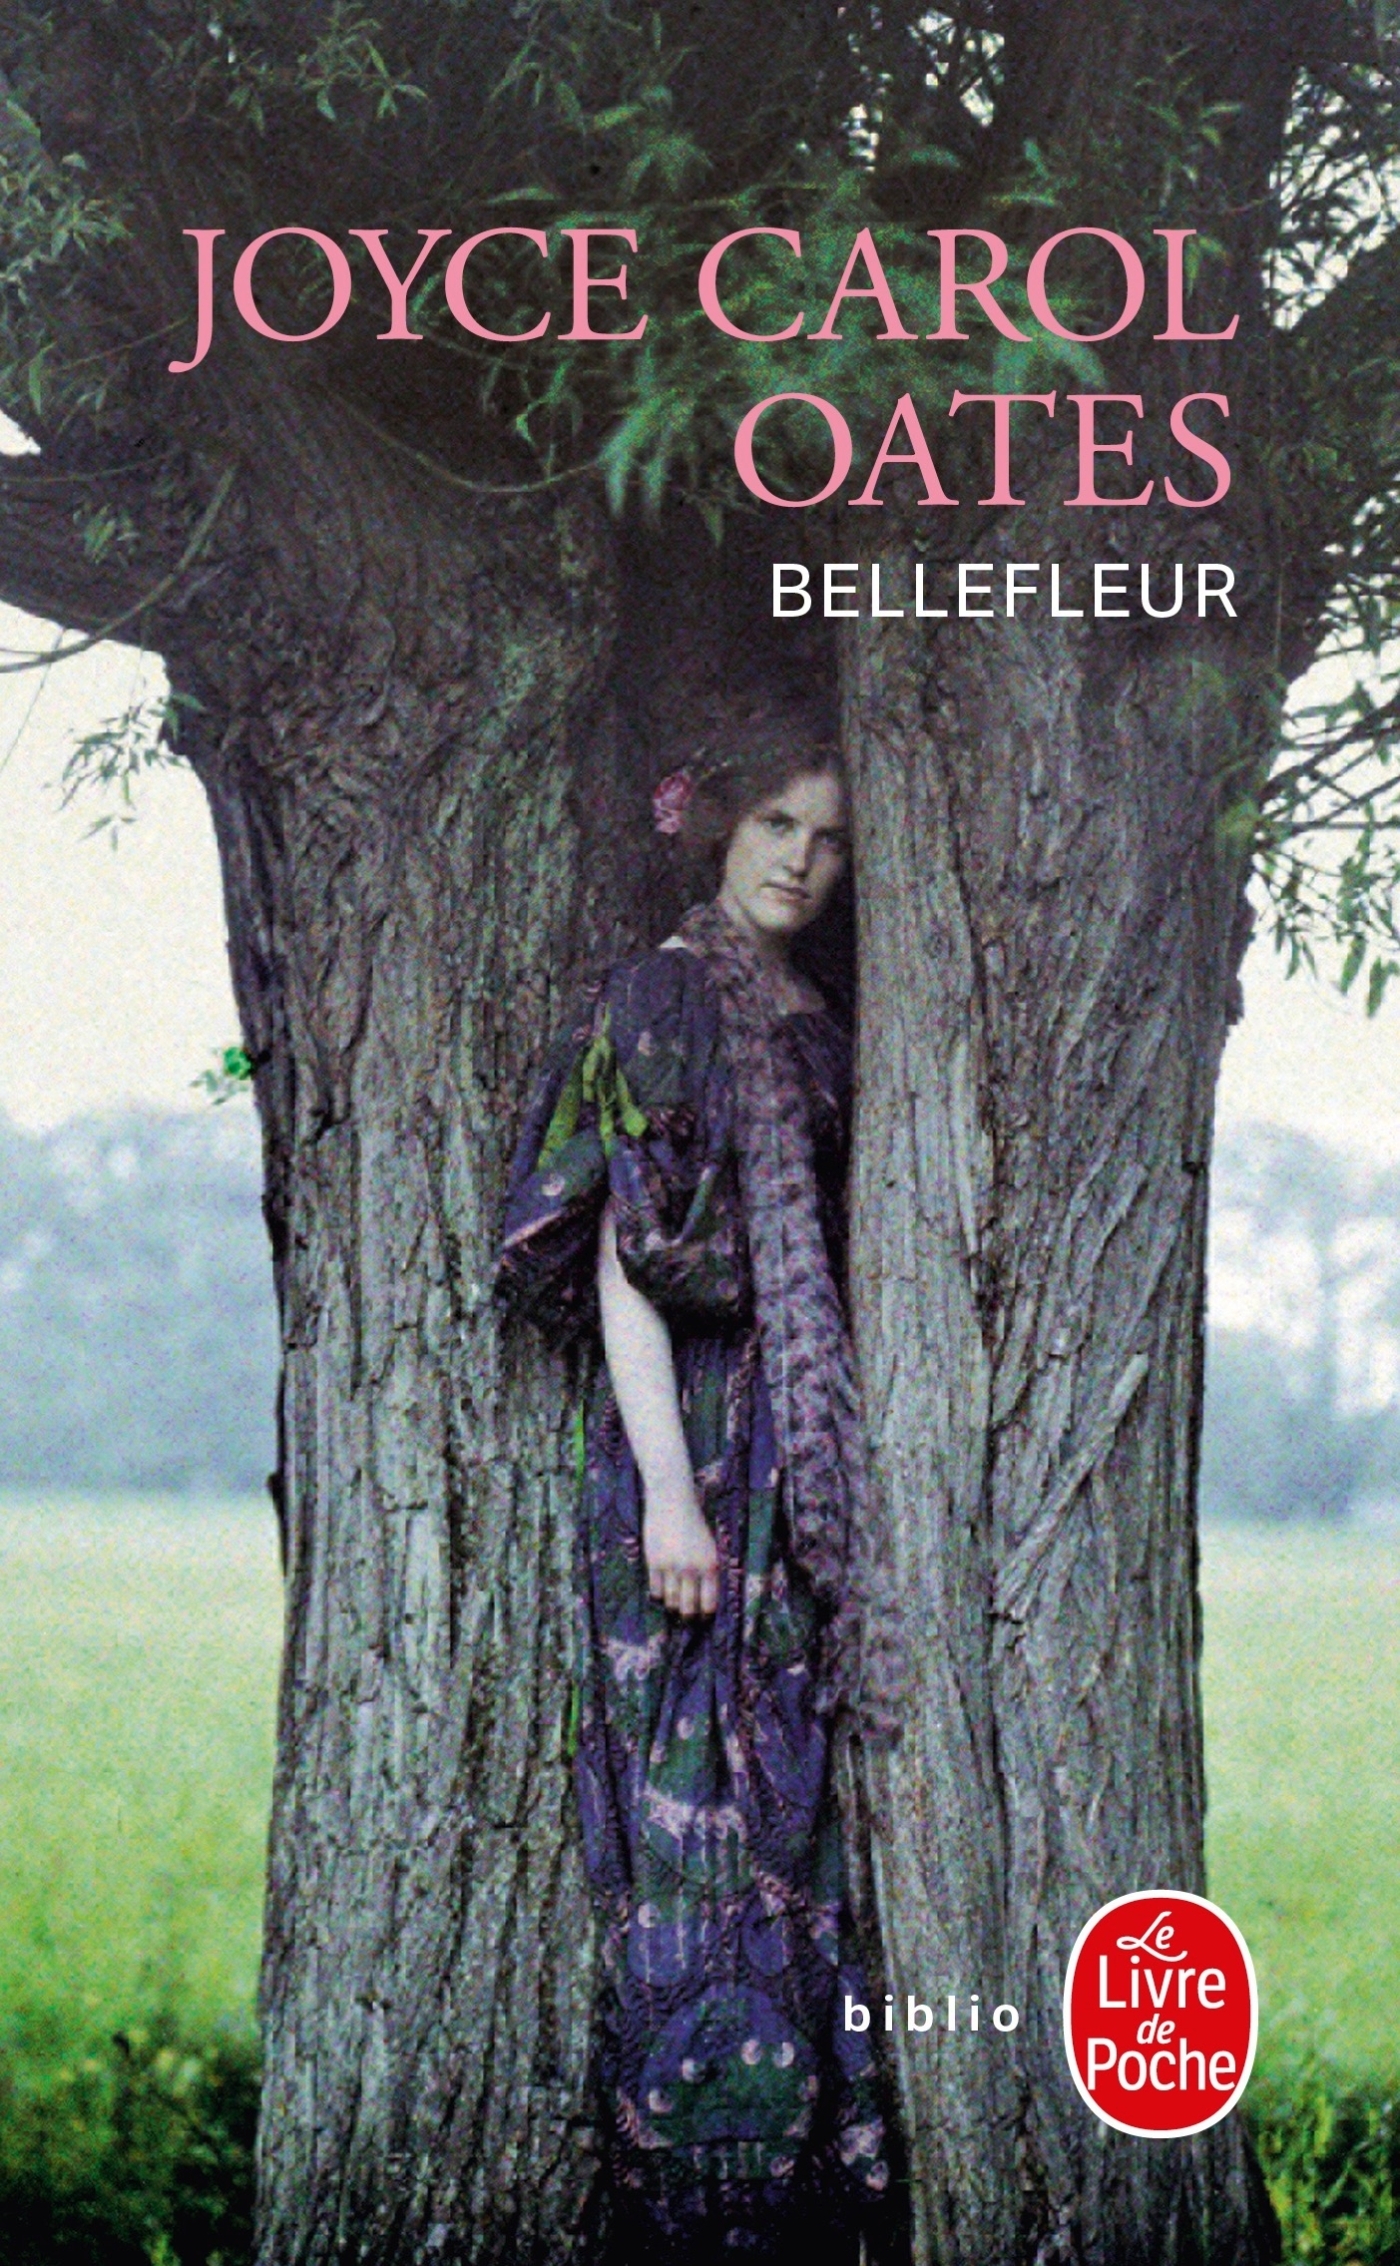 Bellefleur (9782253163008-front-cover)